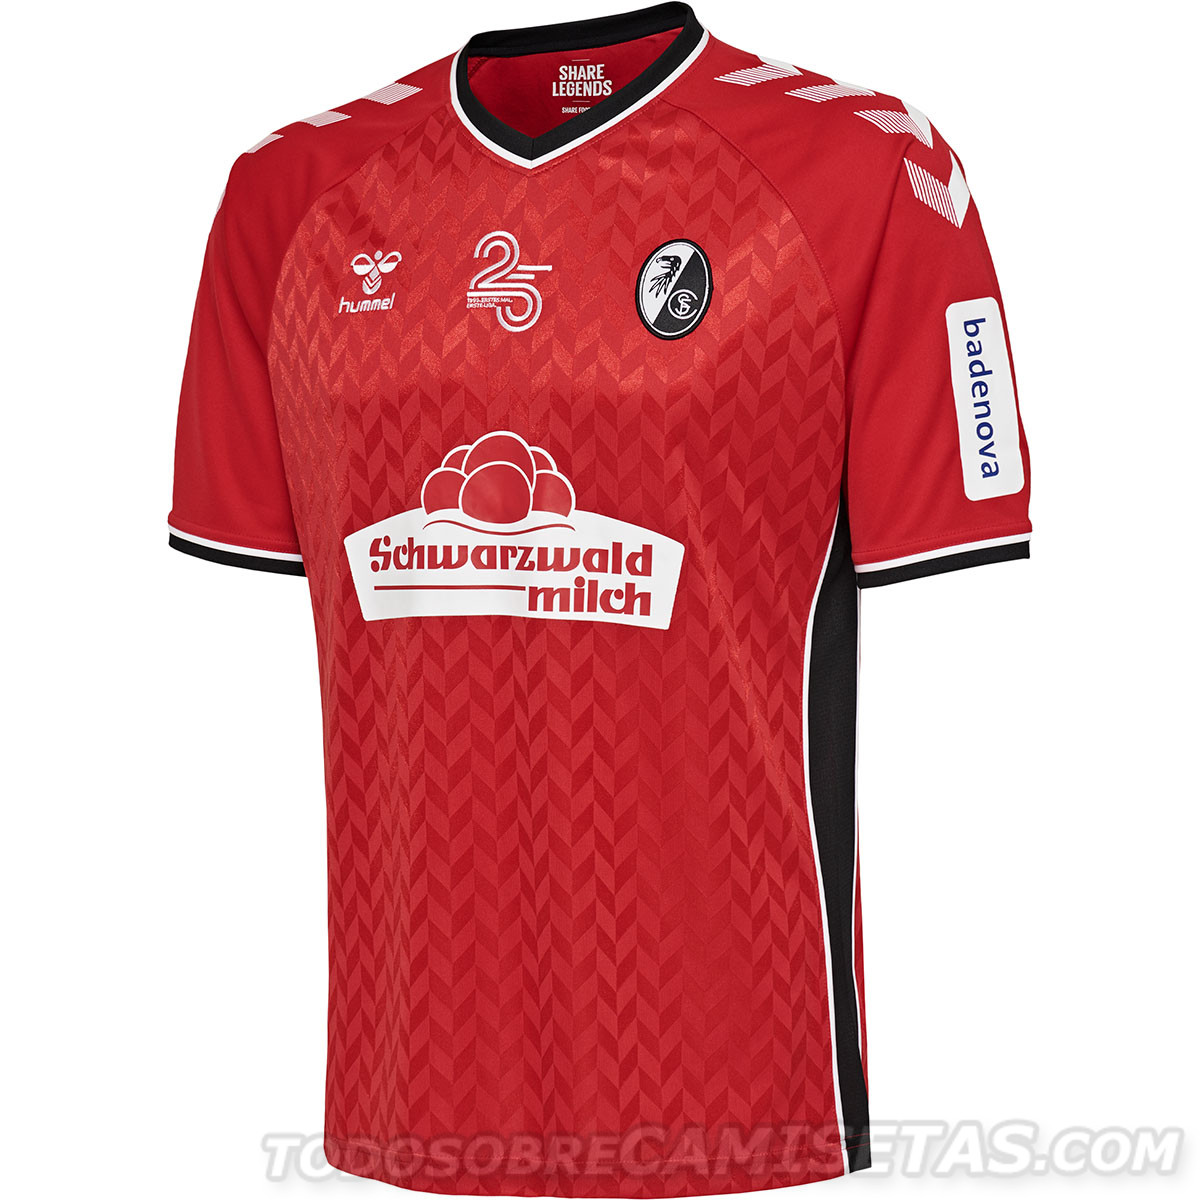 SC Freiburg 25 Years in Bundesliga Hummel Kit